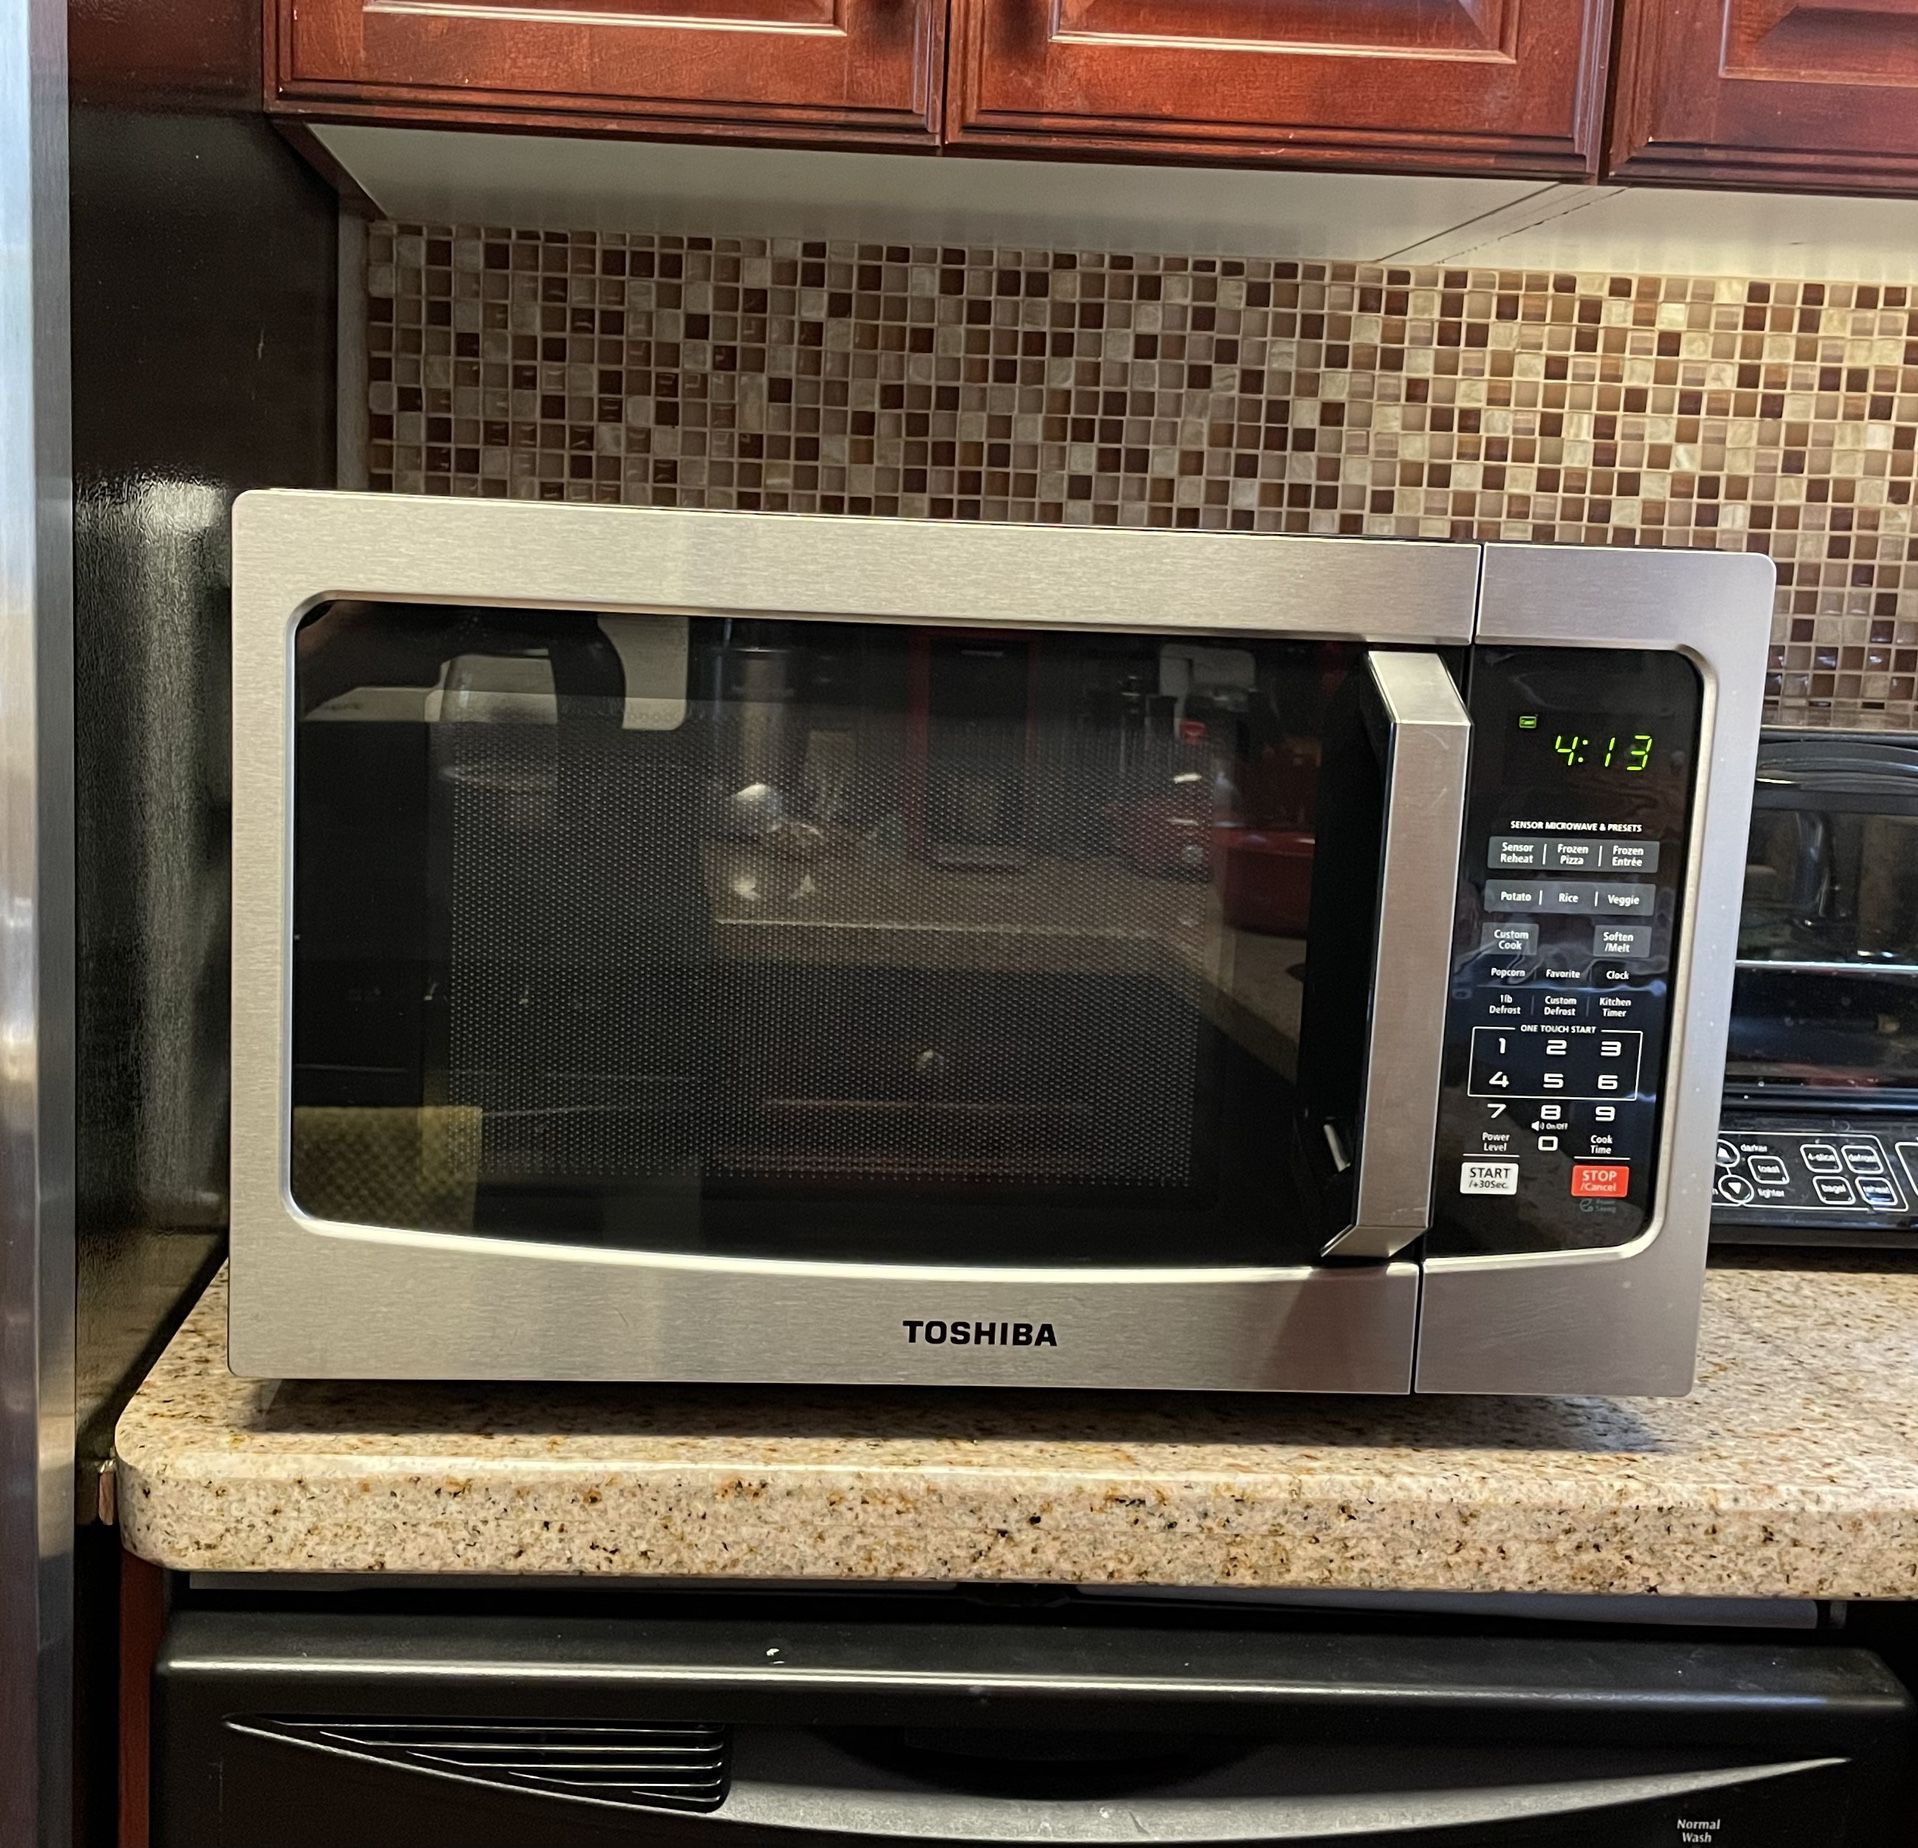 1550 Watt Toshiba Countertop Microwave Oven 